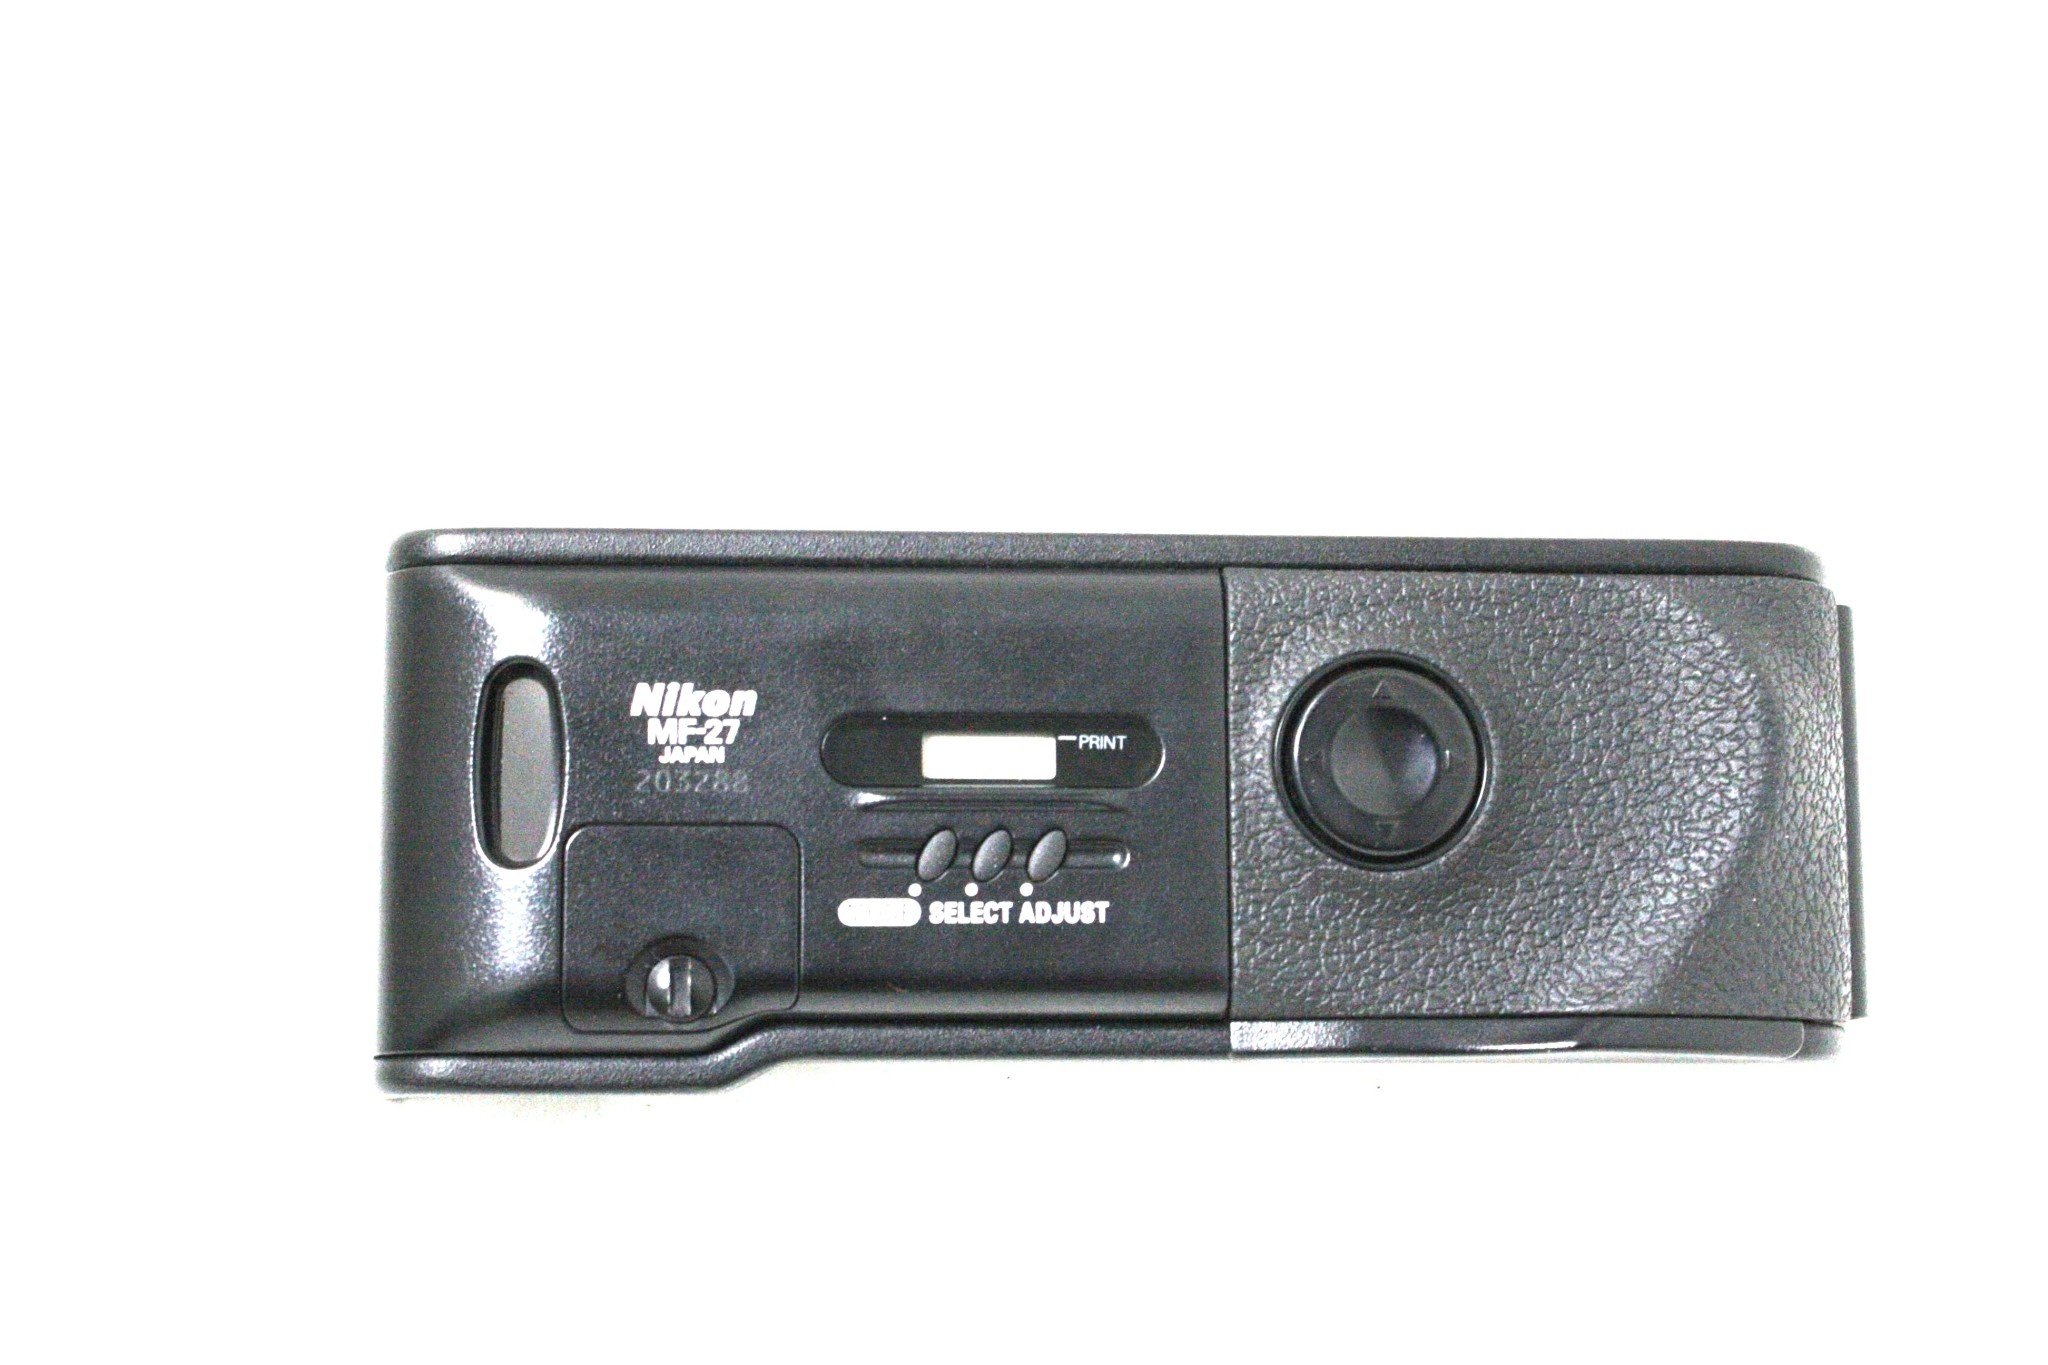 Nikon MF-27 Data Back for Nikon F5 35mm Film SLR (IN BOX - Open BOX)